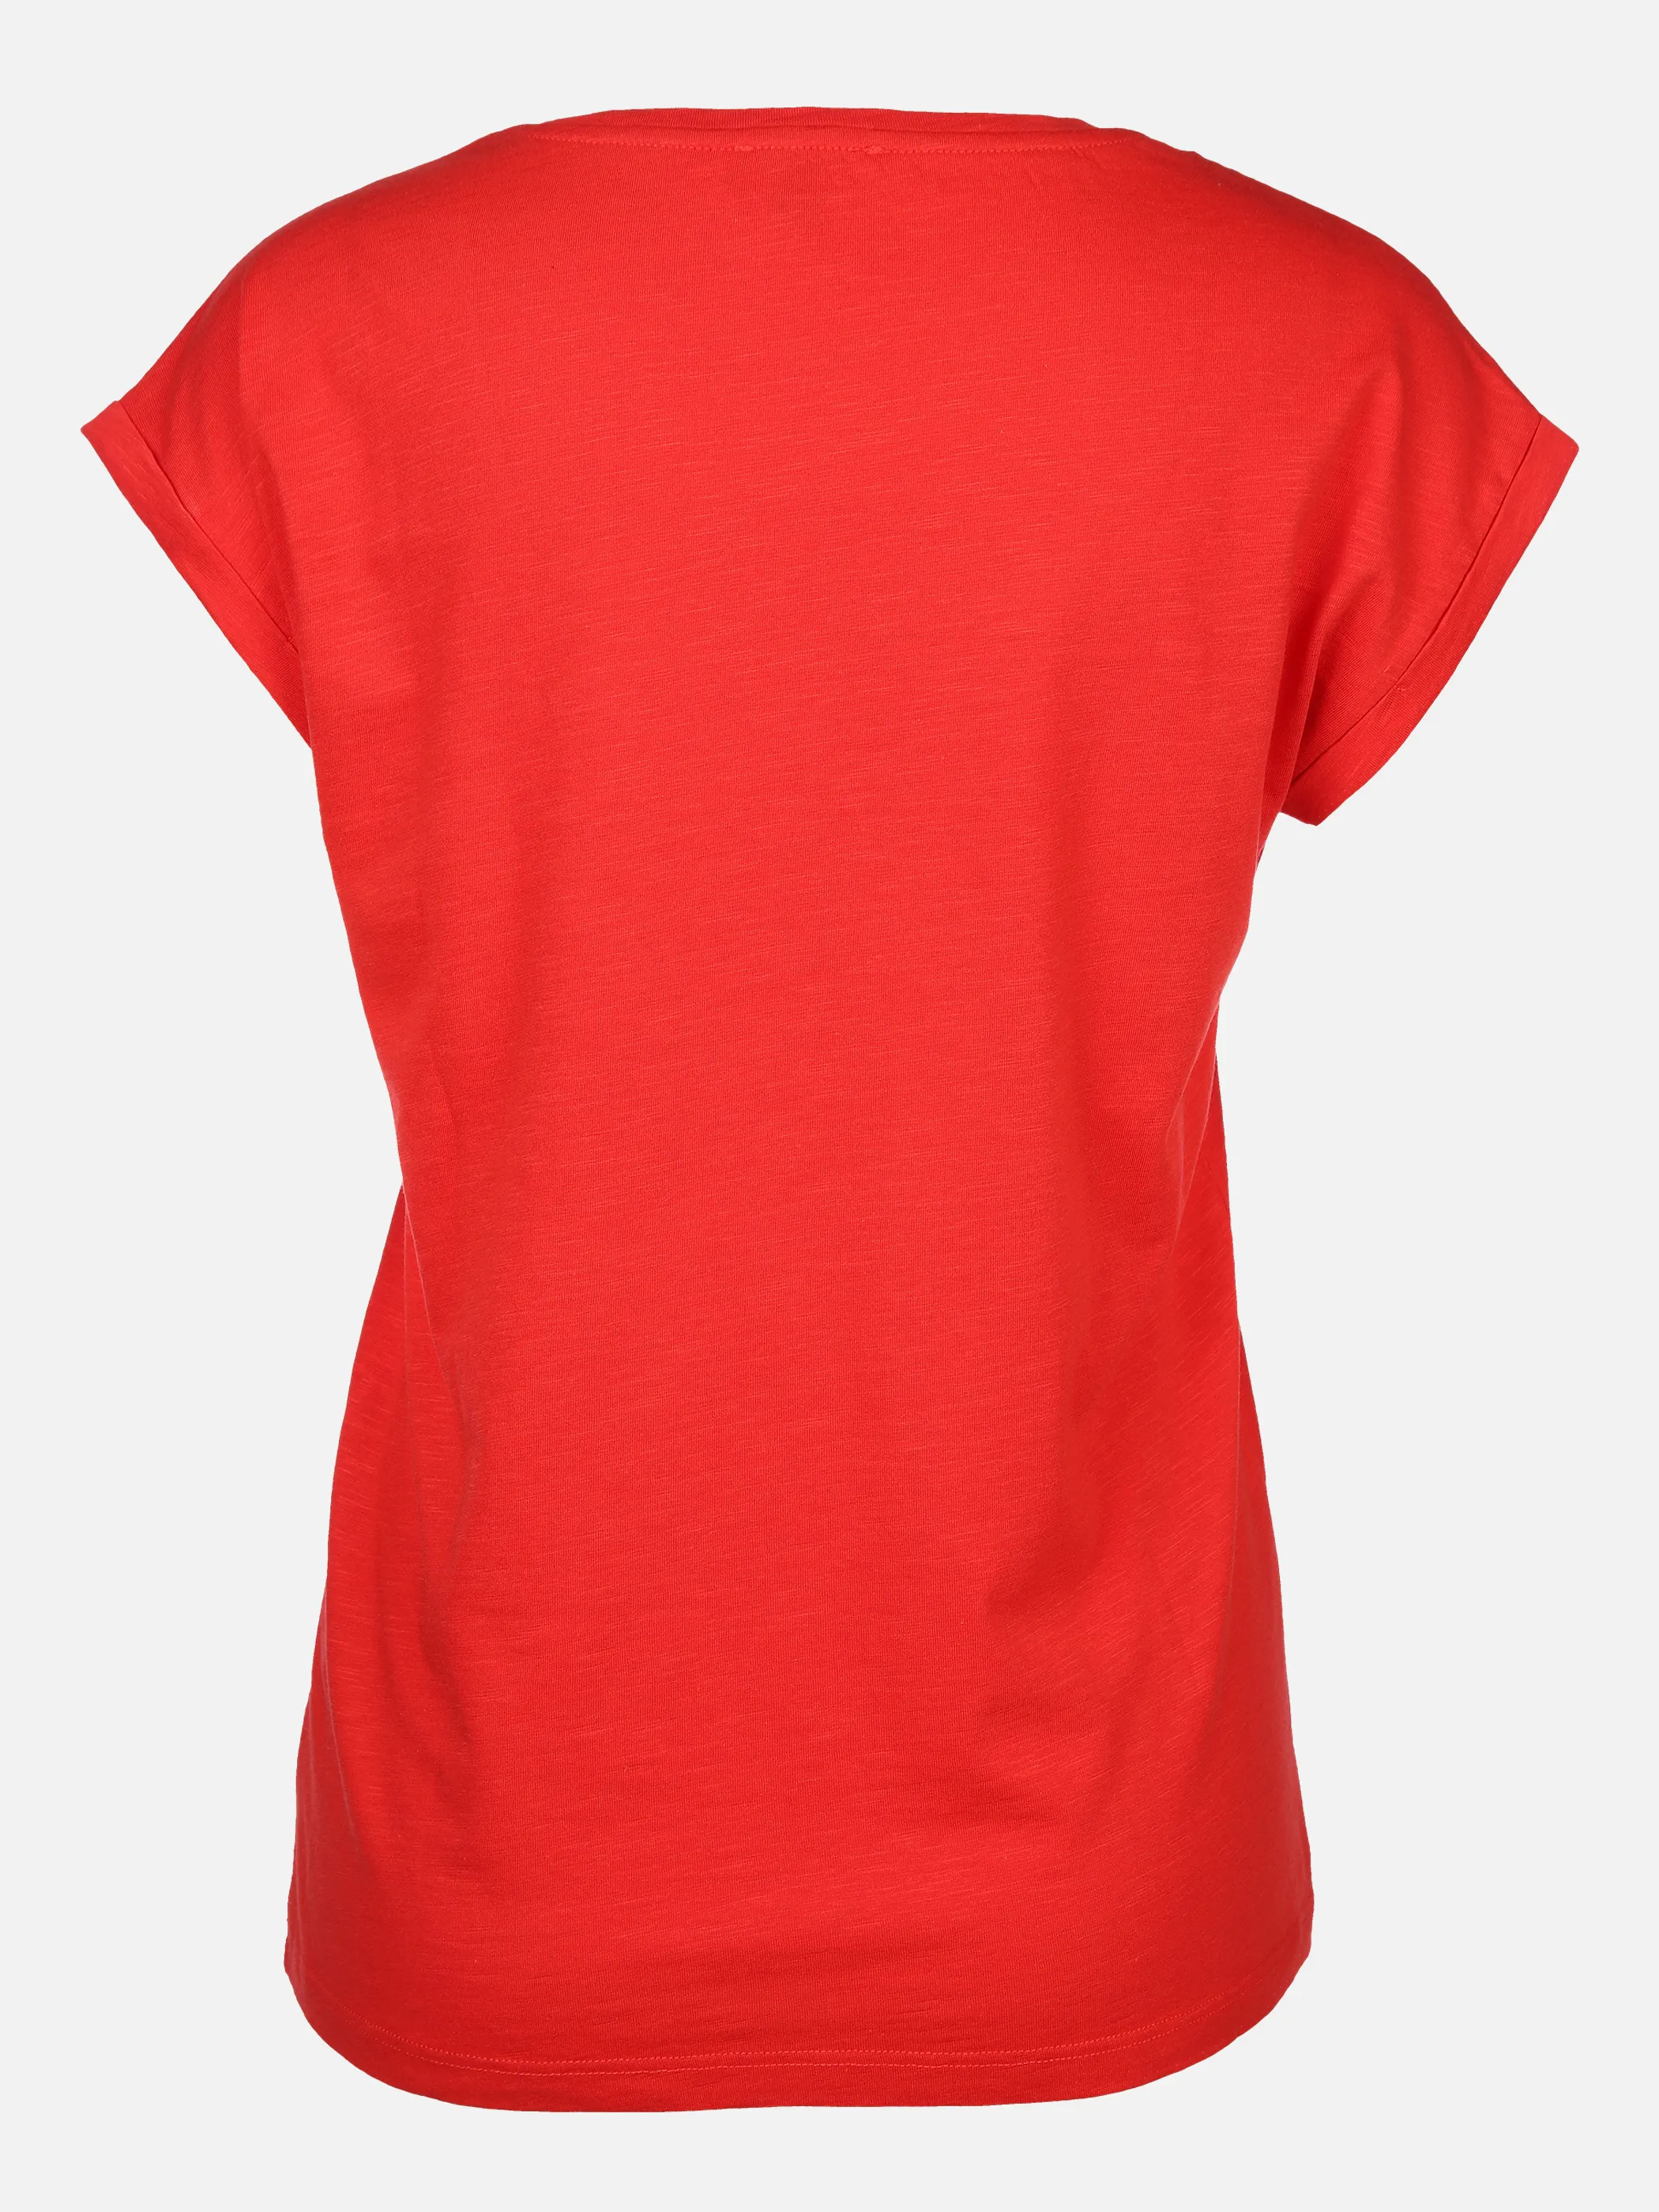 Sure Da-T-Shirt m. Straßmotiv Rot 837597 SUMMER RED 2